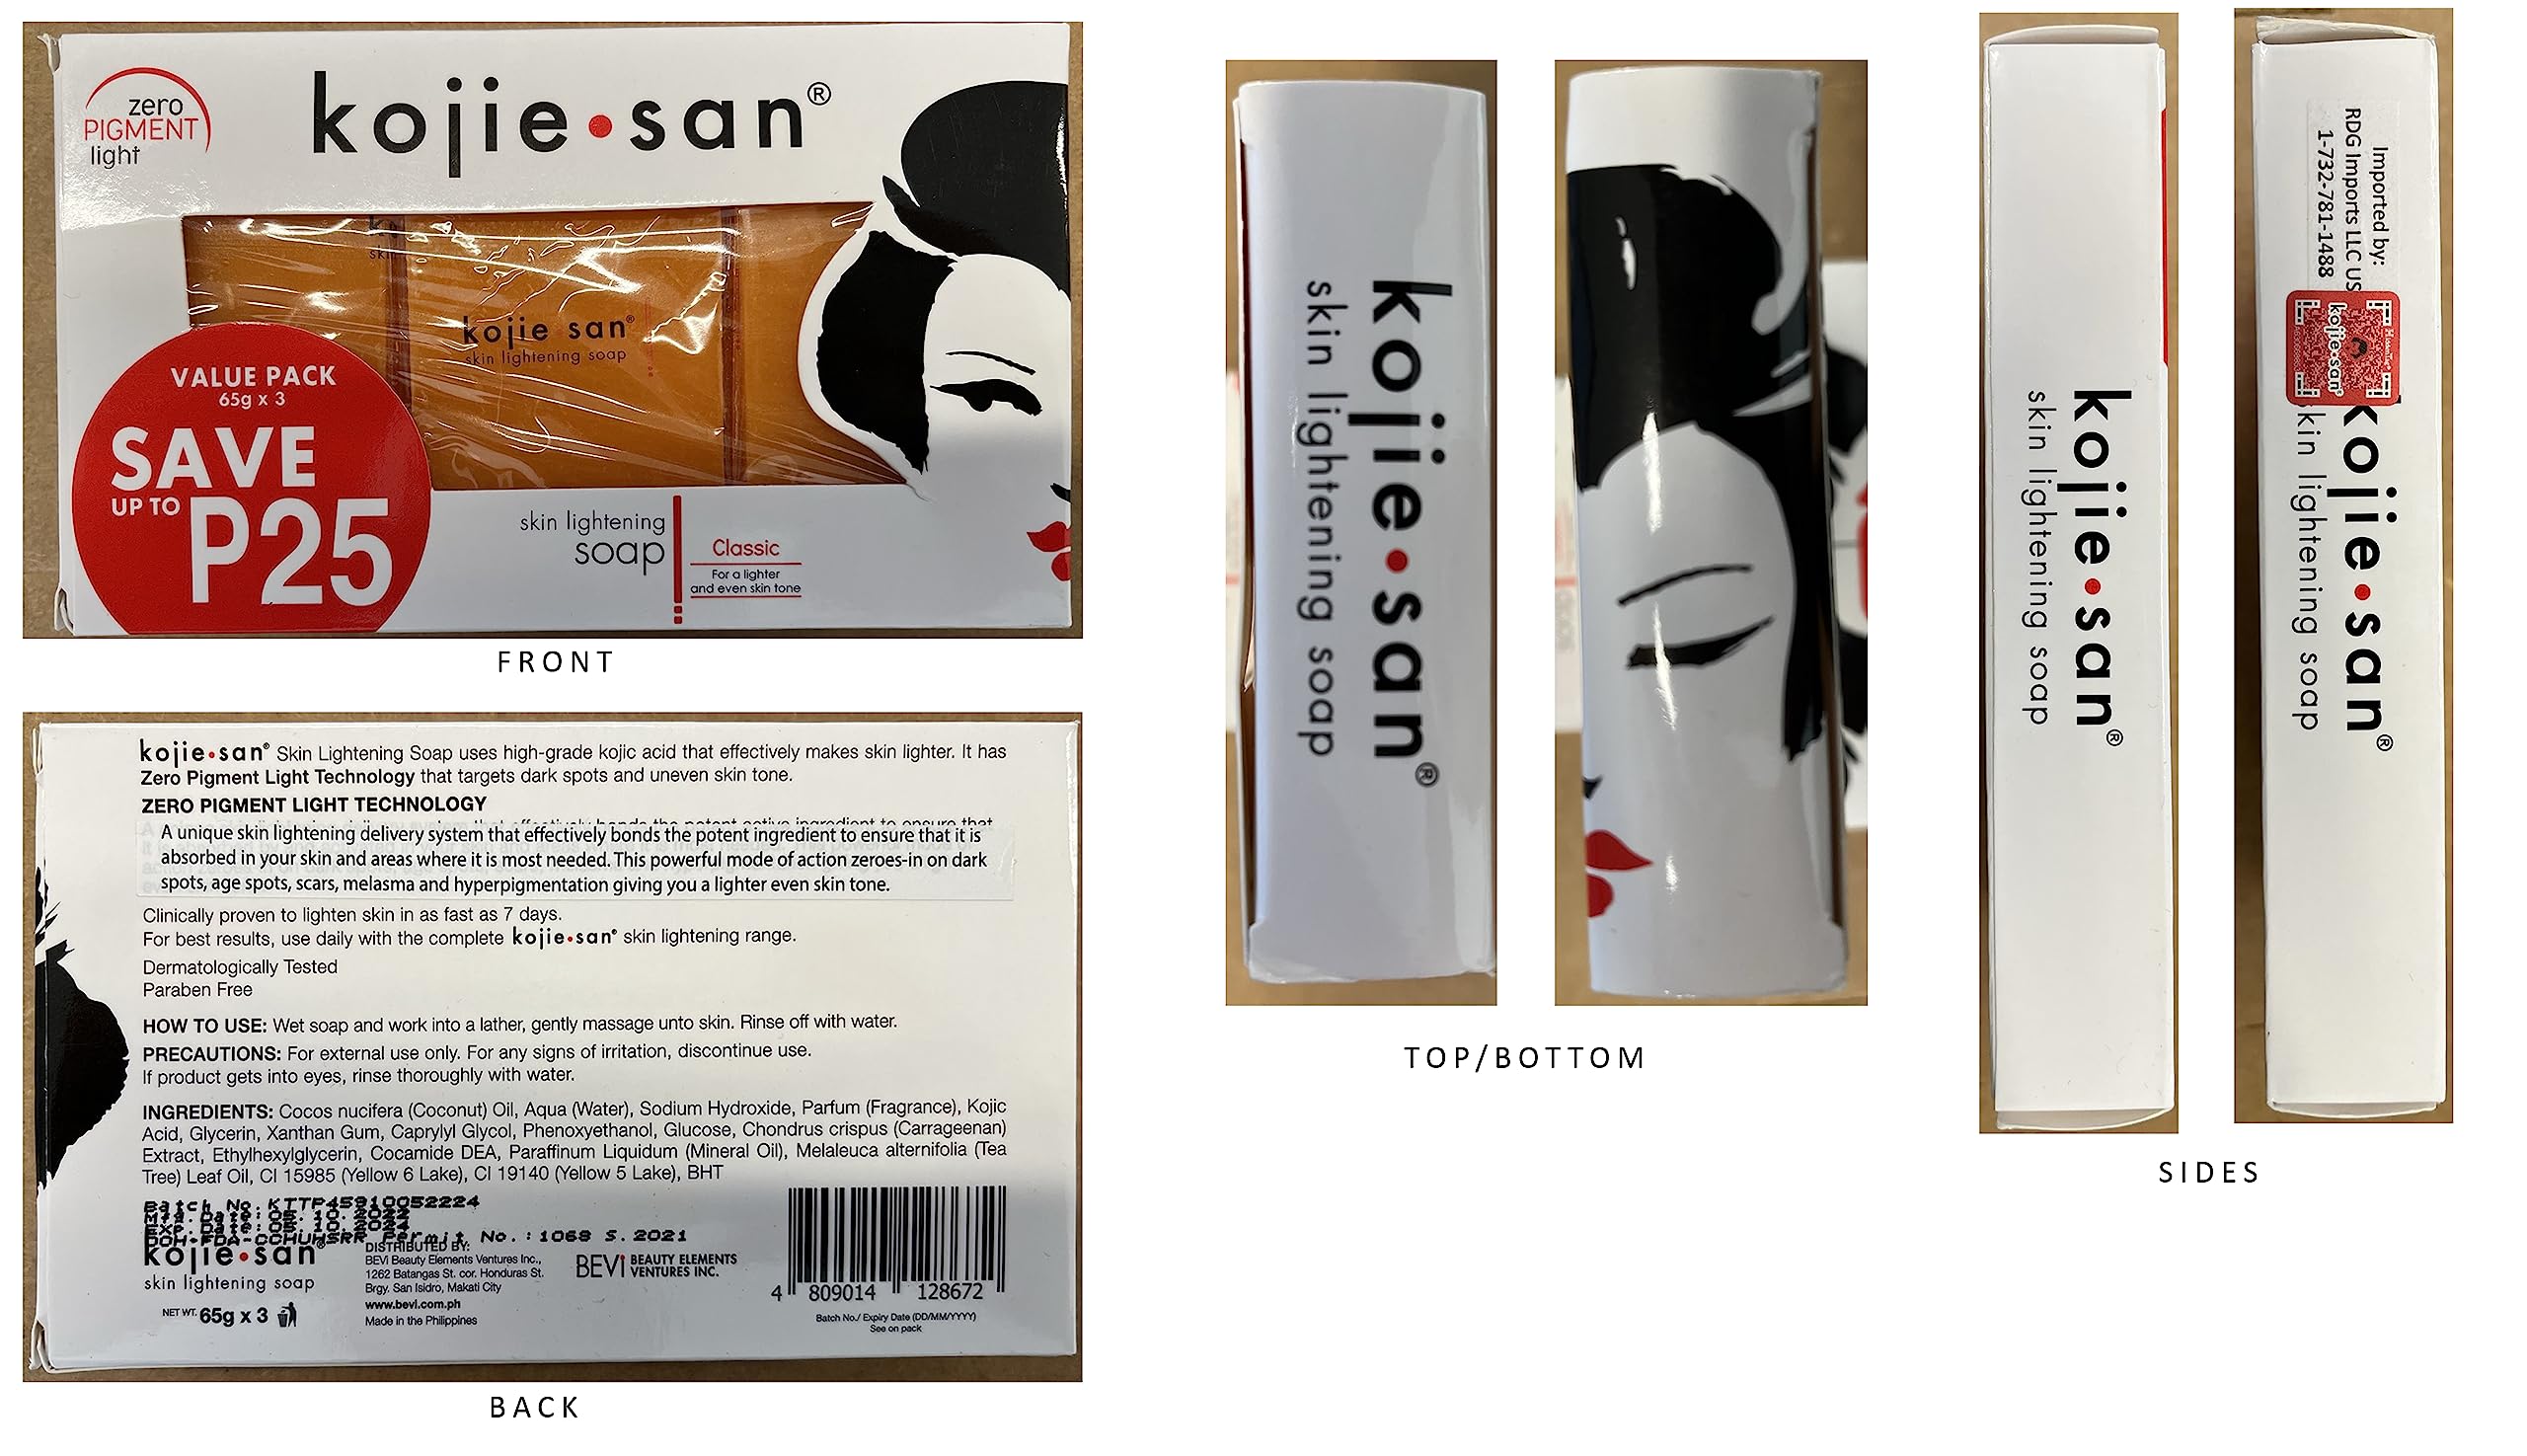 Kojie San Skin Beauty Soap - The Original Kojic Acid Soap, Even Skin Tone and Reduce Appearance of Hyperpigmentation (65 grams, 3 Bars Per Pack) - 6 Bars Total!